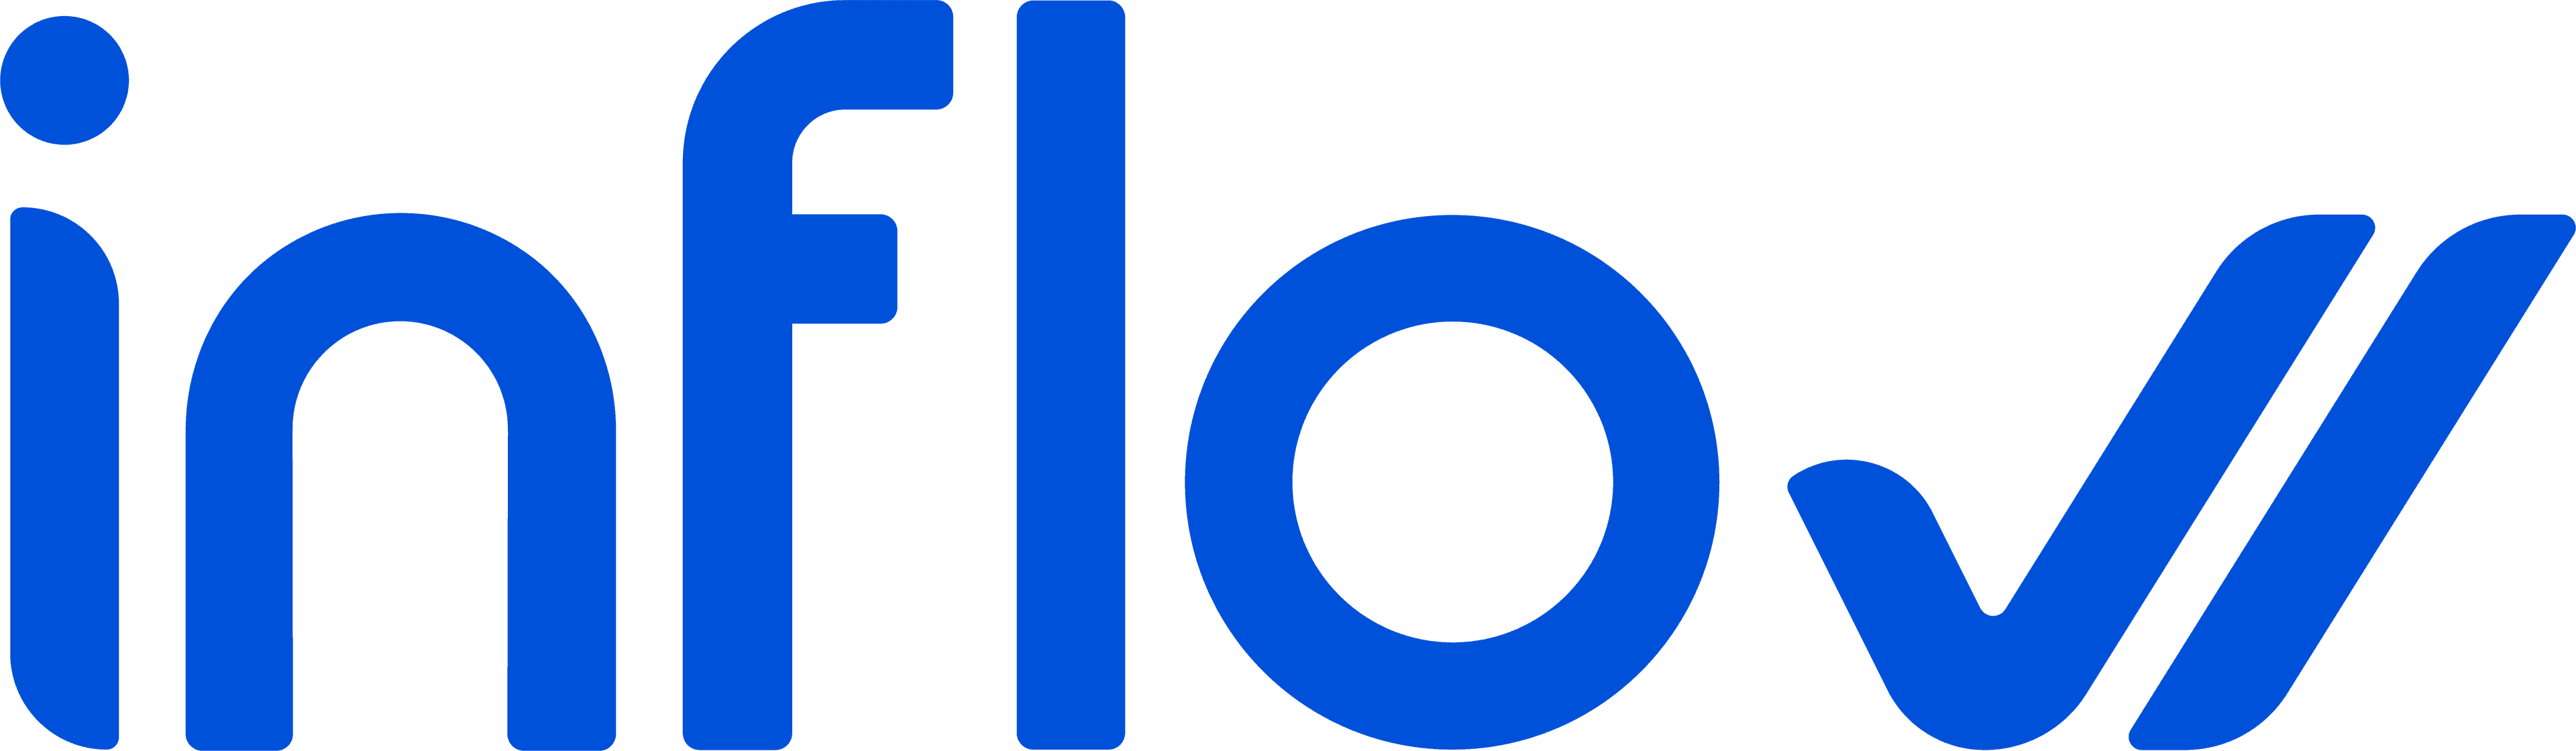 inflow-logo